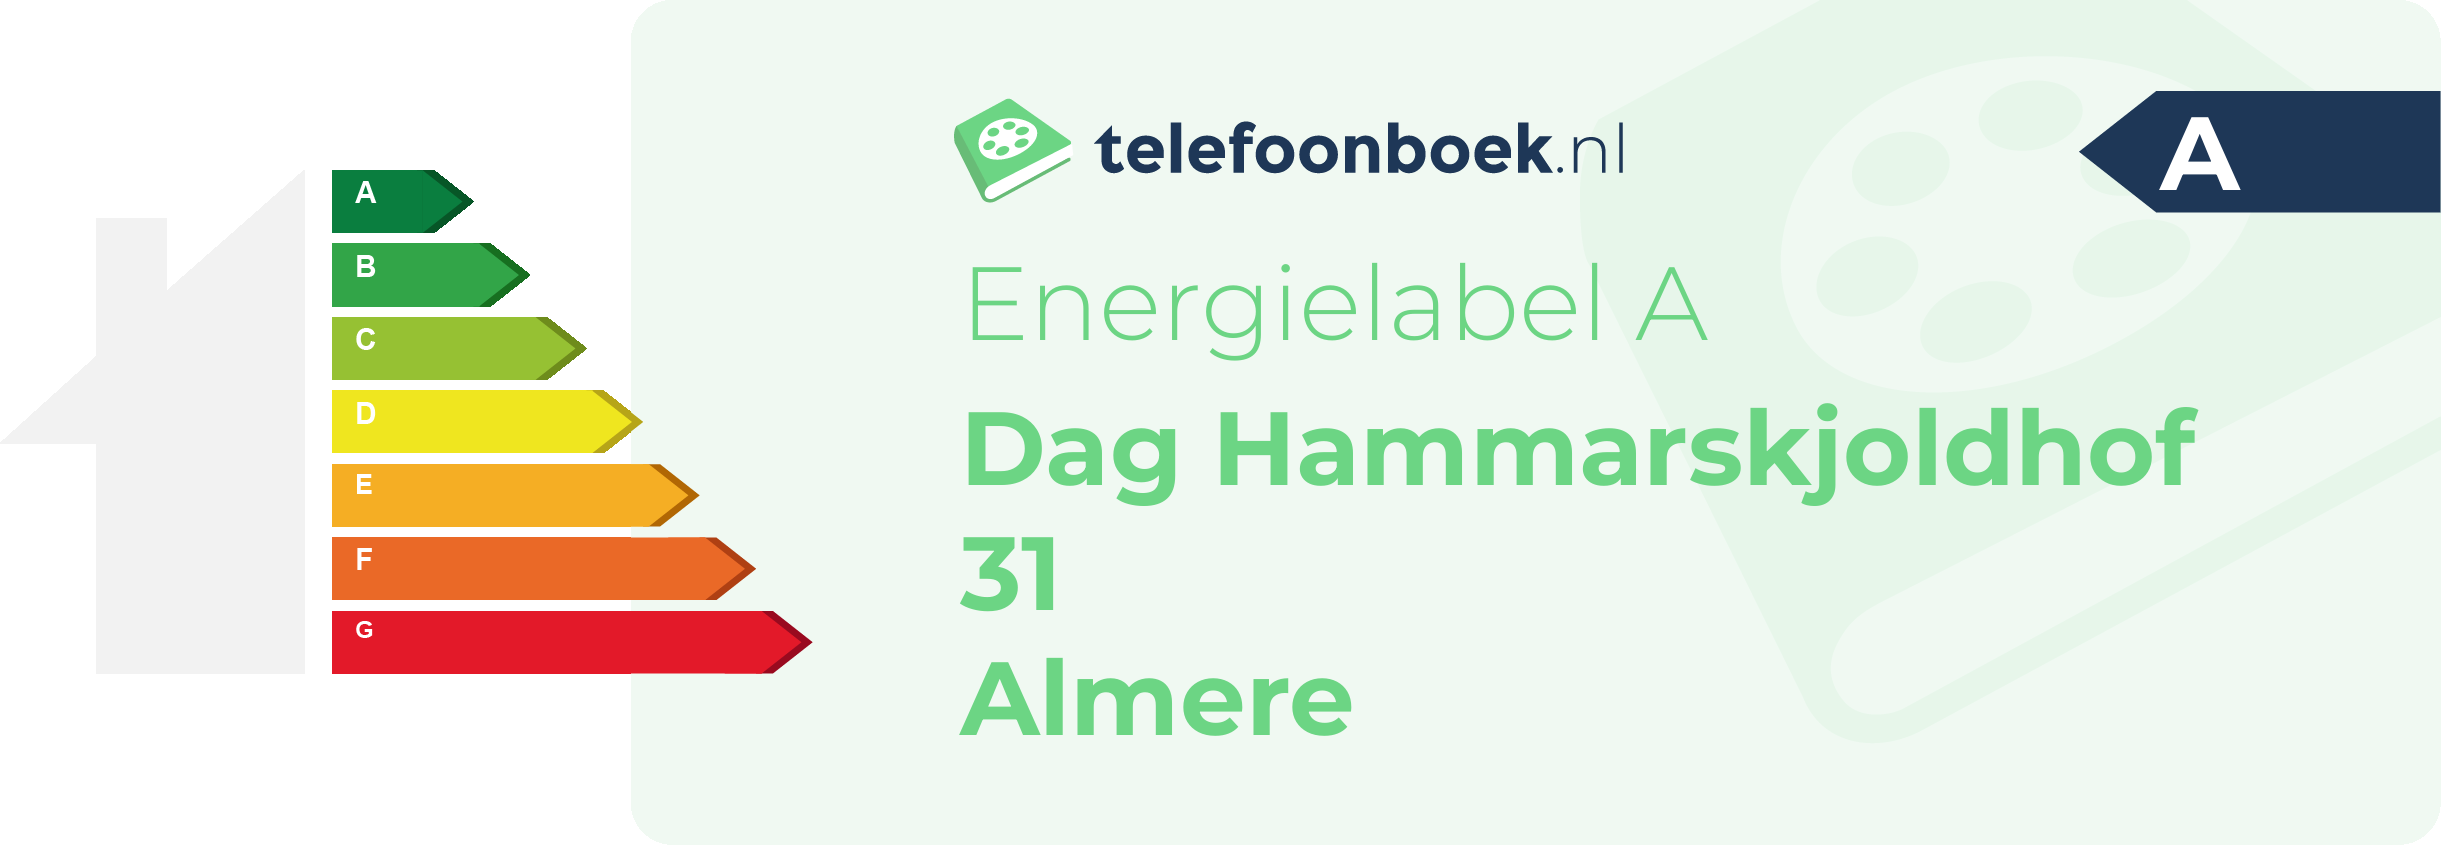 Energielabel Dag Hammarskjoldhof 31 Almere